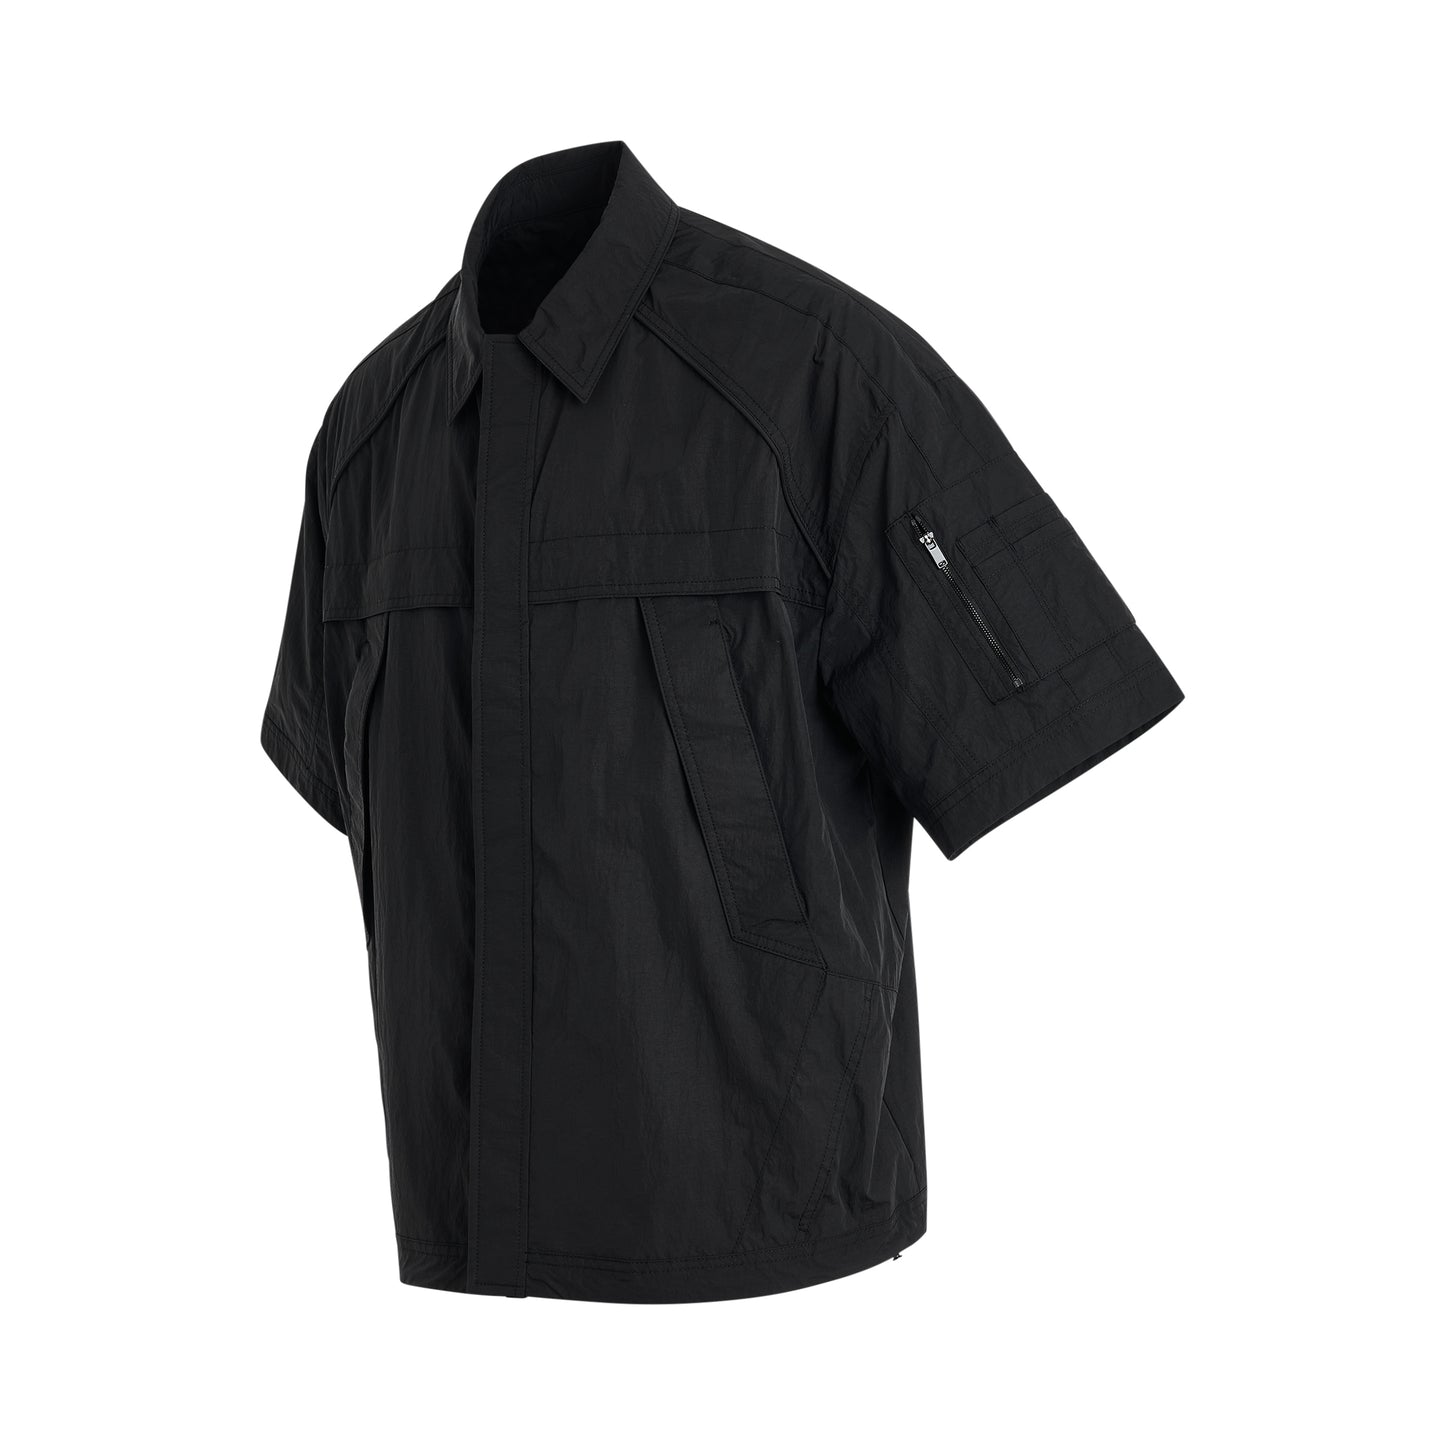 Military Short-Sleeve Zip-up Shirt in Black